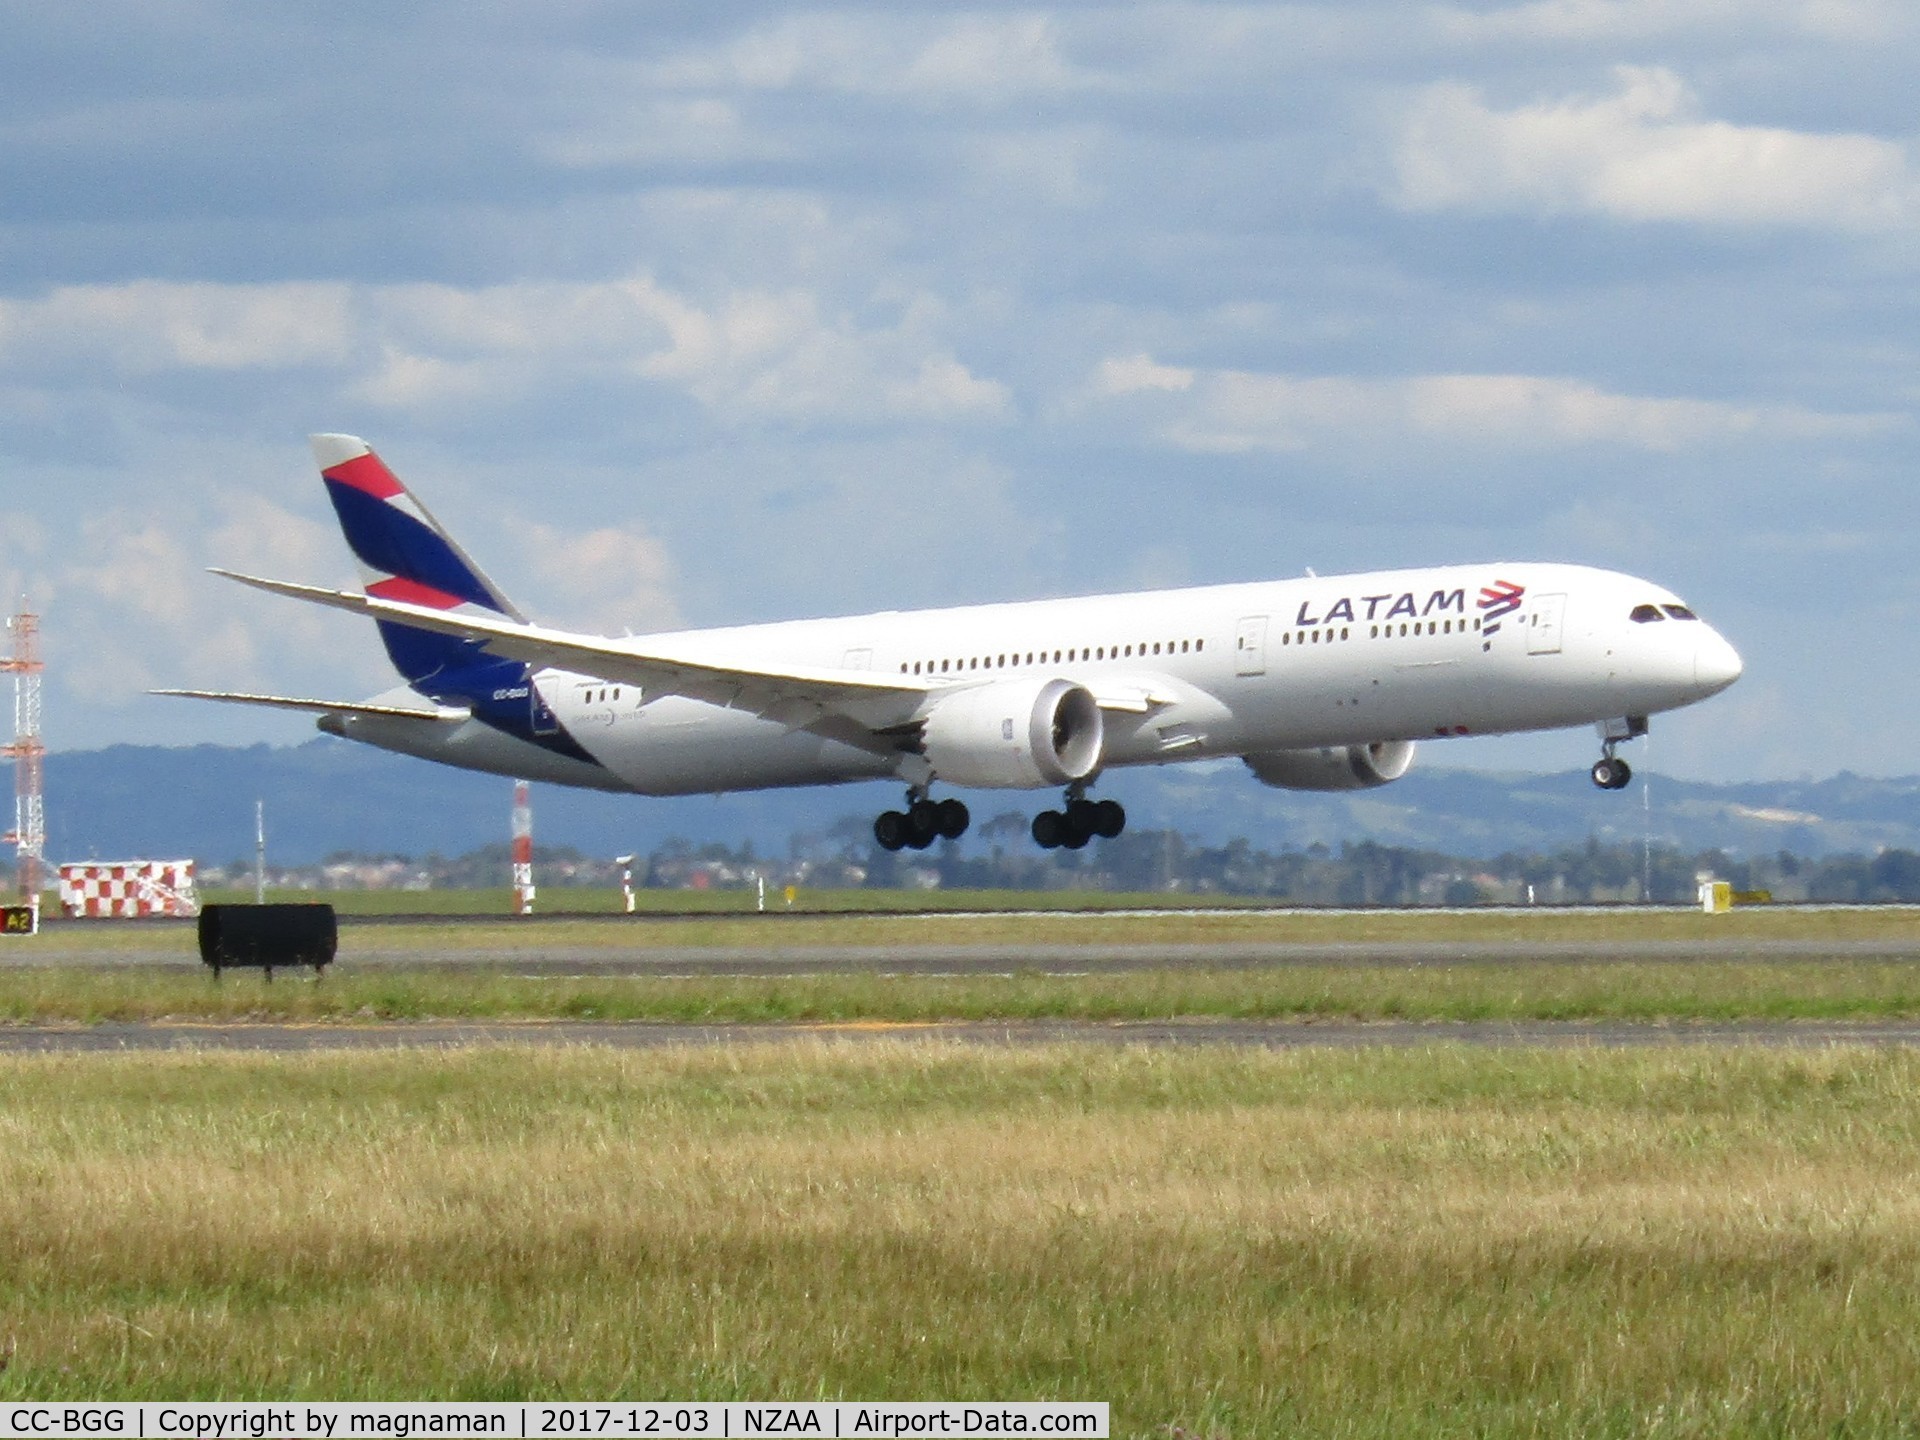 CC-BGG, 2015 Boeing 787-9 Dreamliner Dreamliner C/N 38461, about to land at AKL